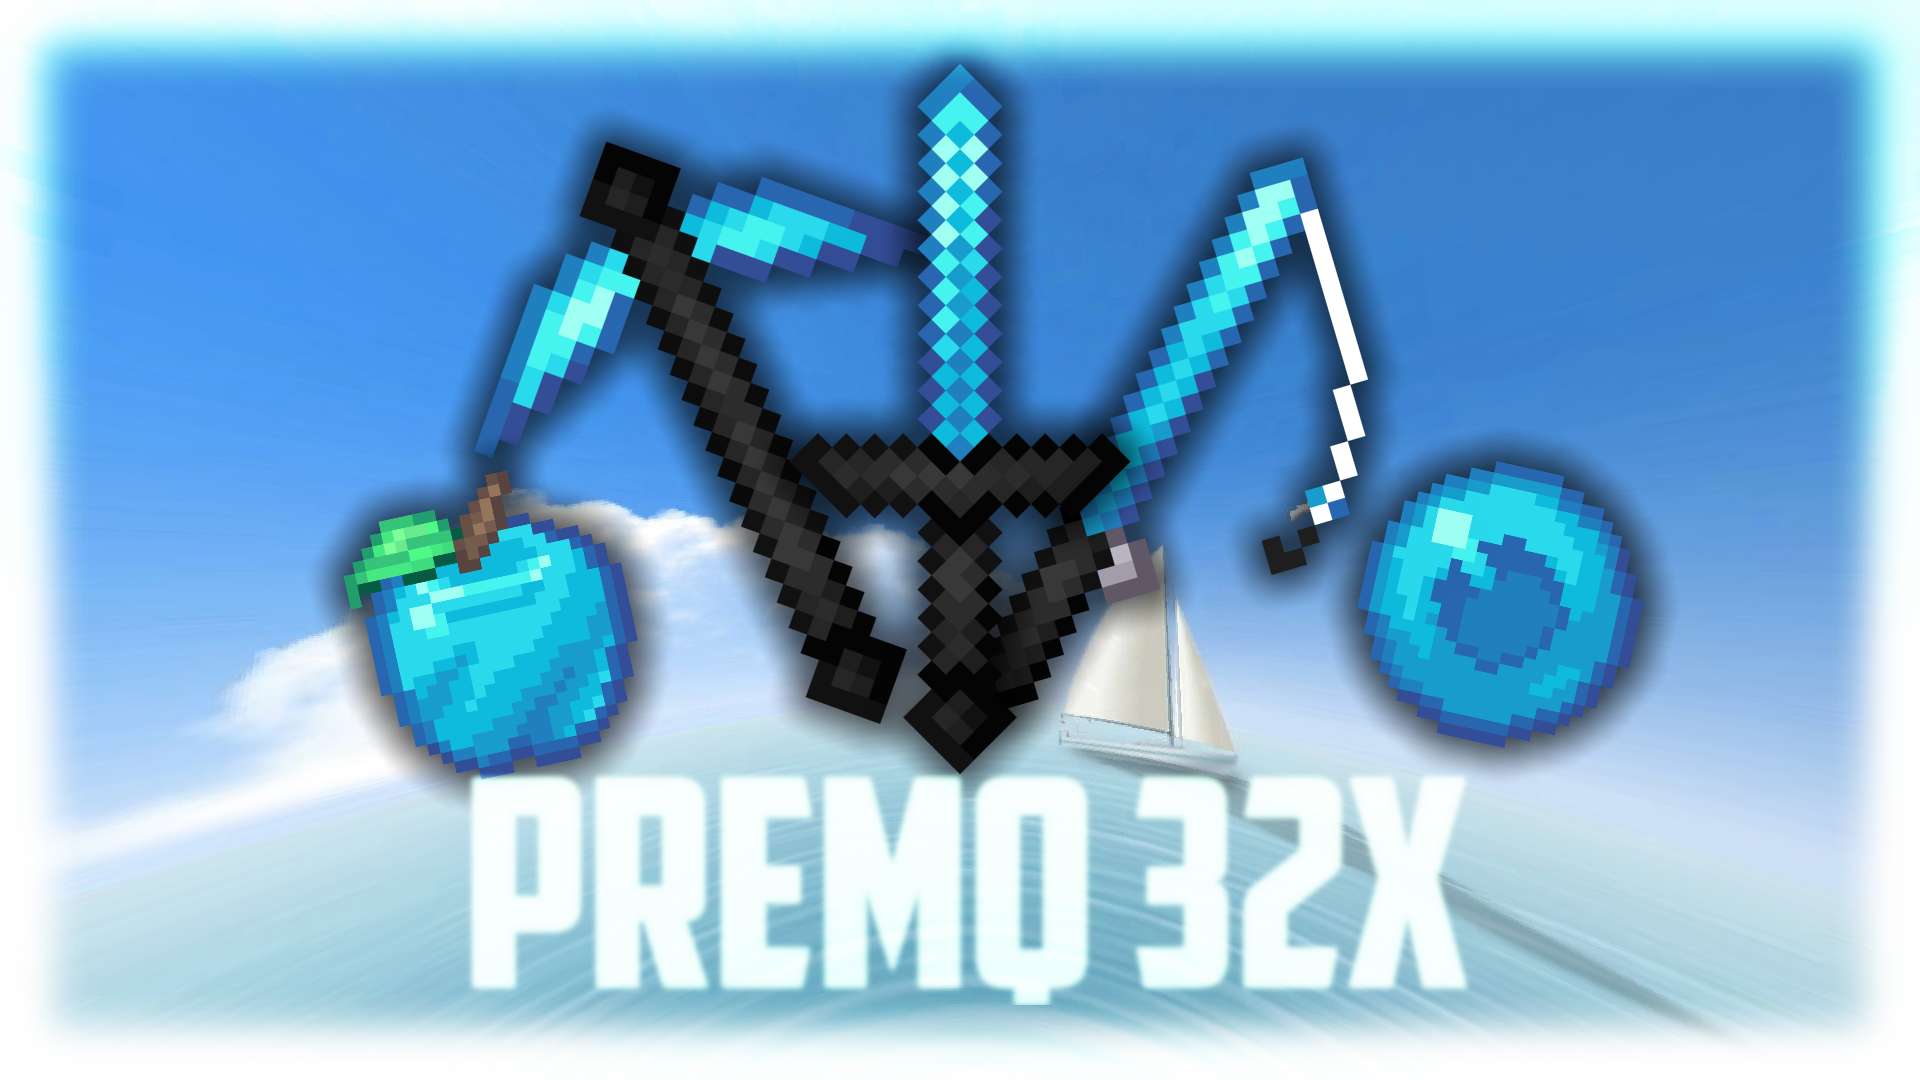 Premq Revamp 32x by Zlax on PvPRP